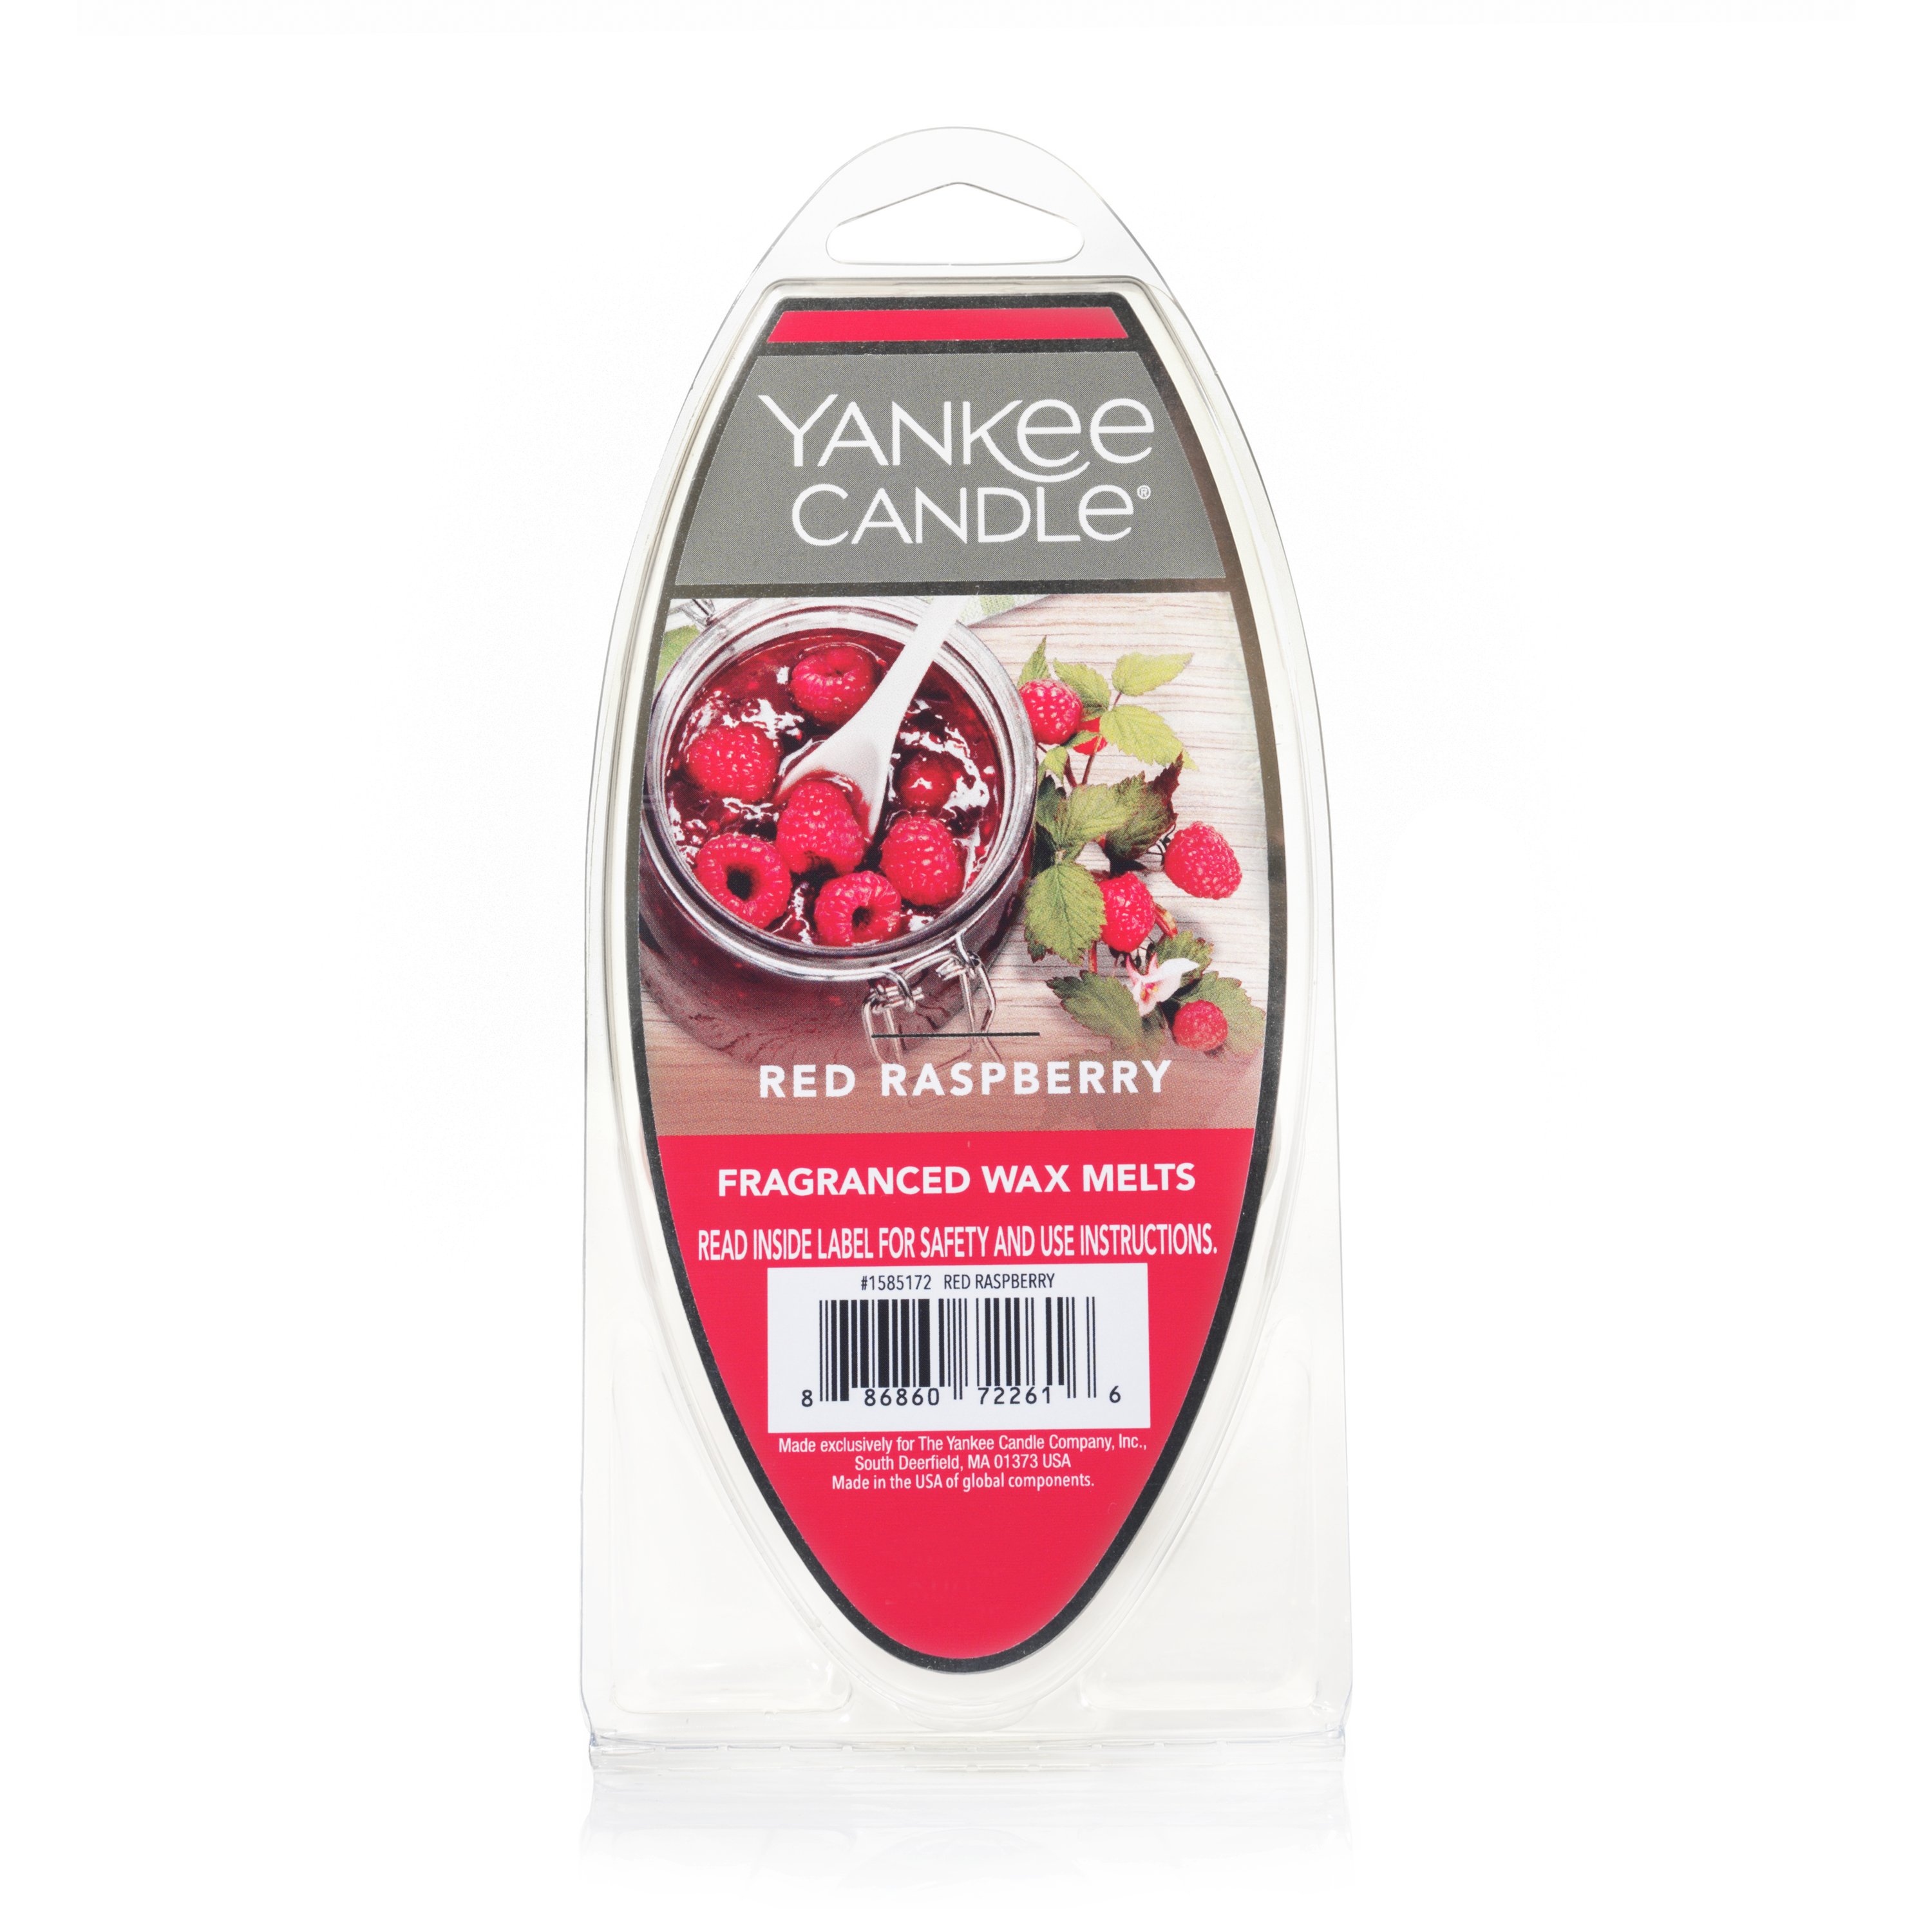 Yankee Candle Mandarin Cranberry Wax tart